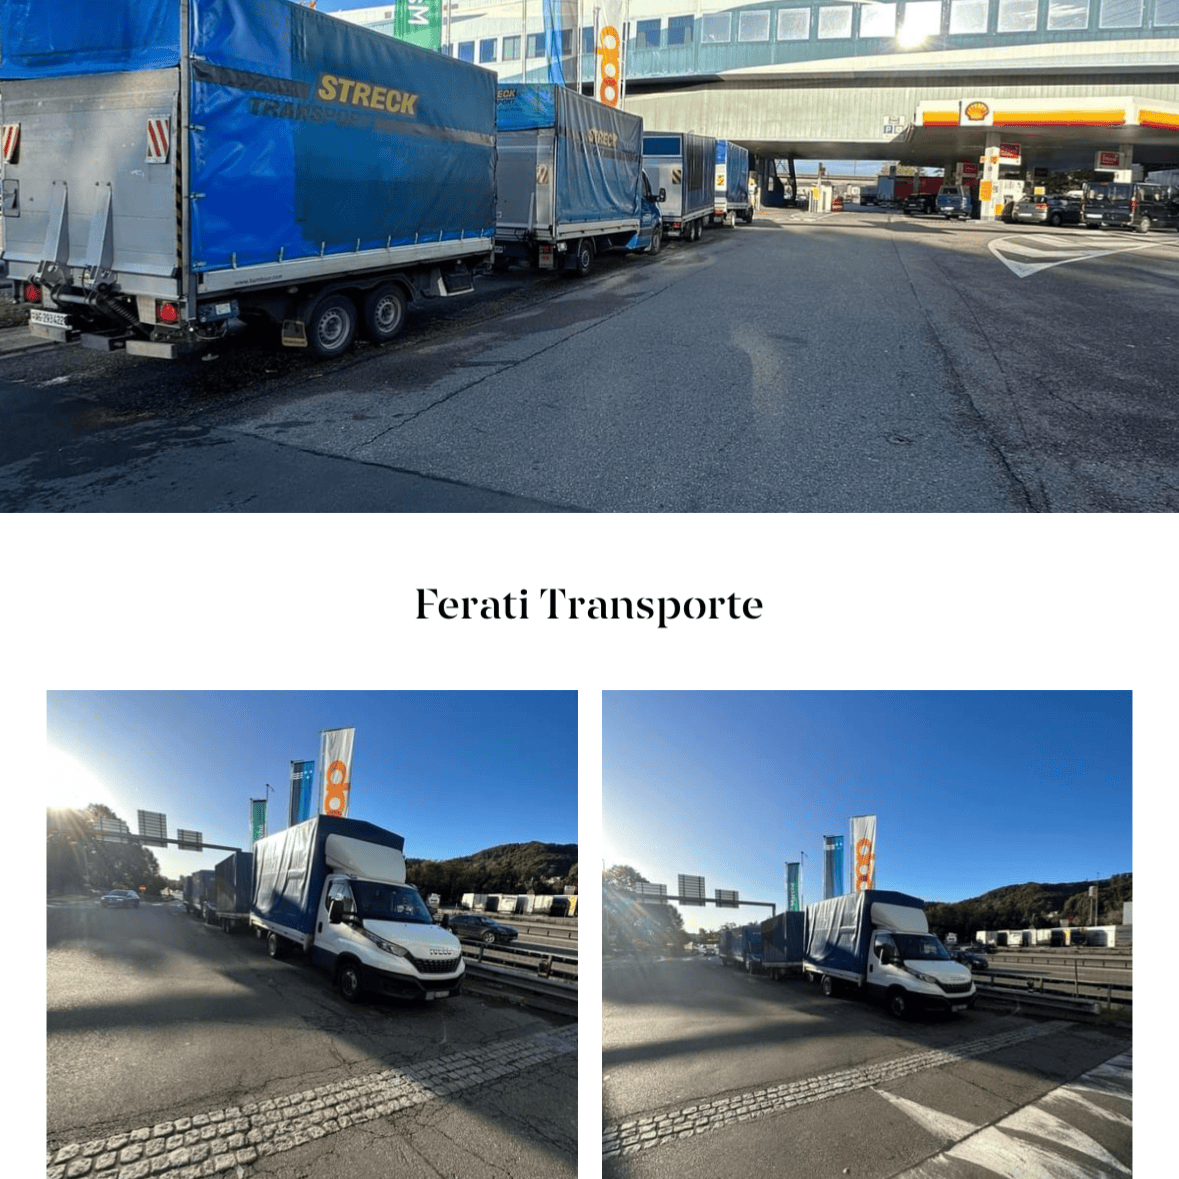 Ferati Transporte GmbH